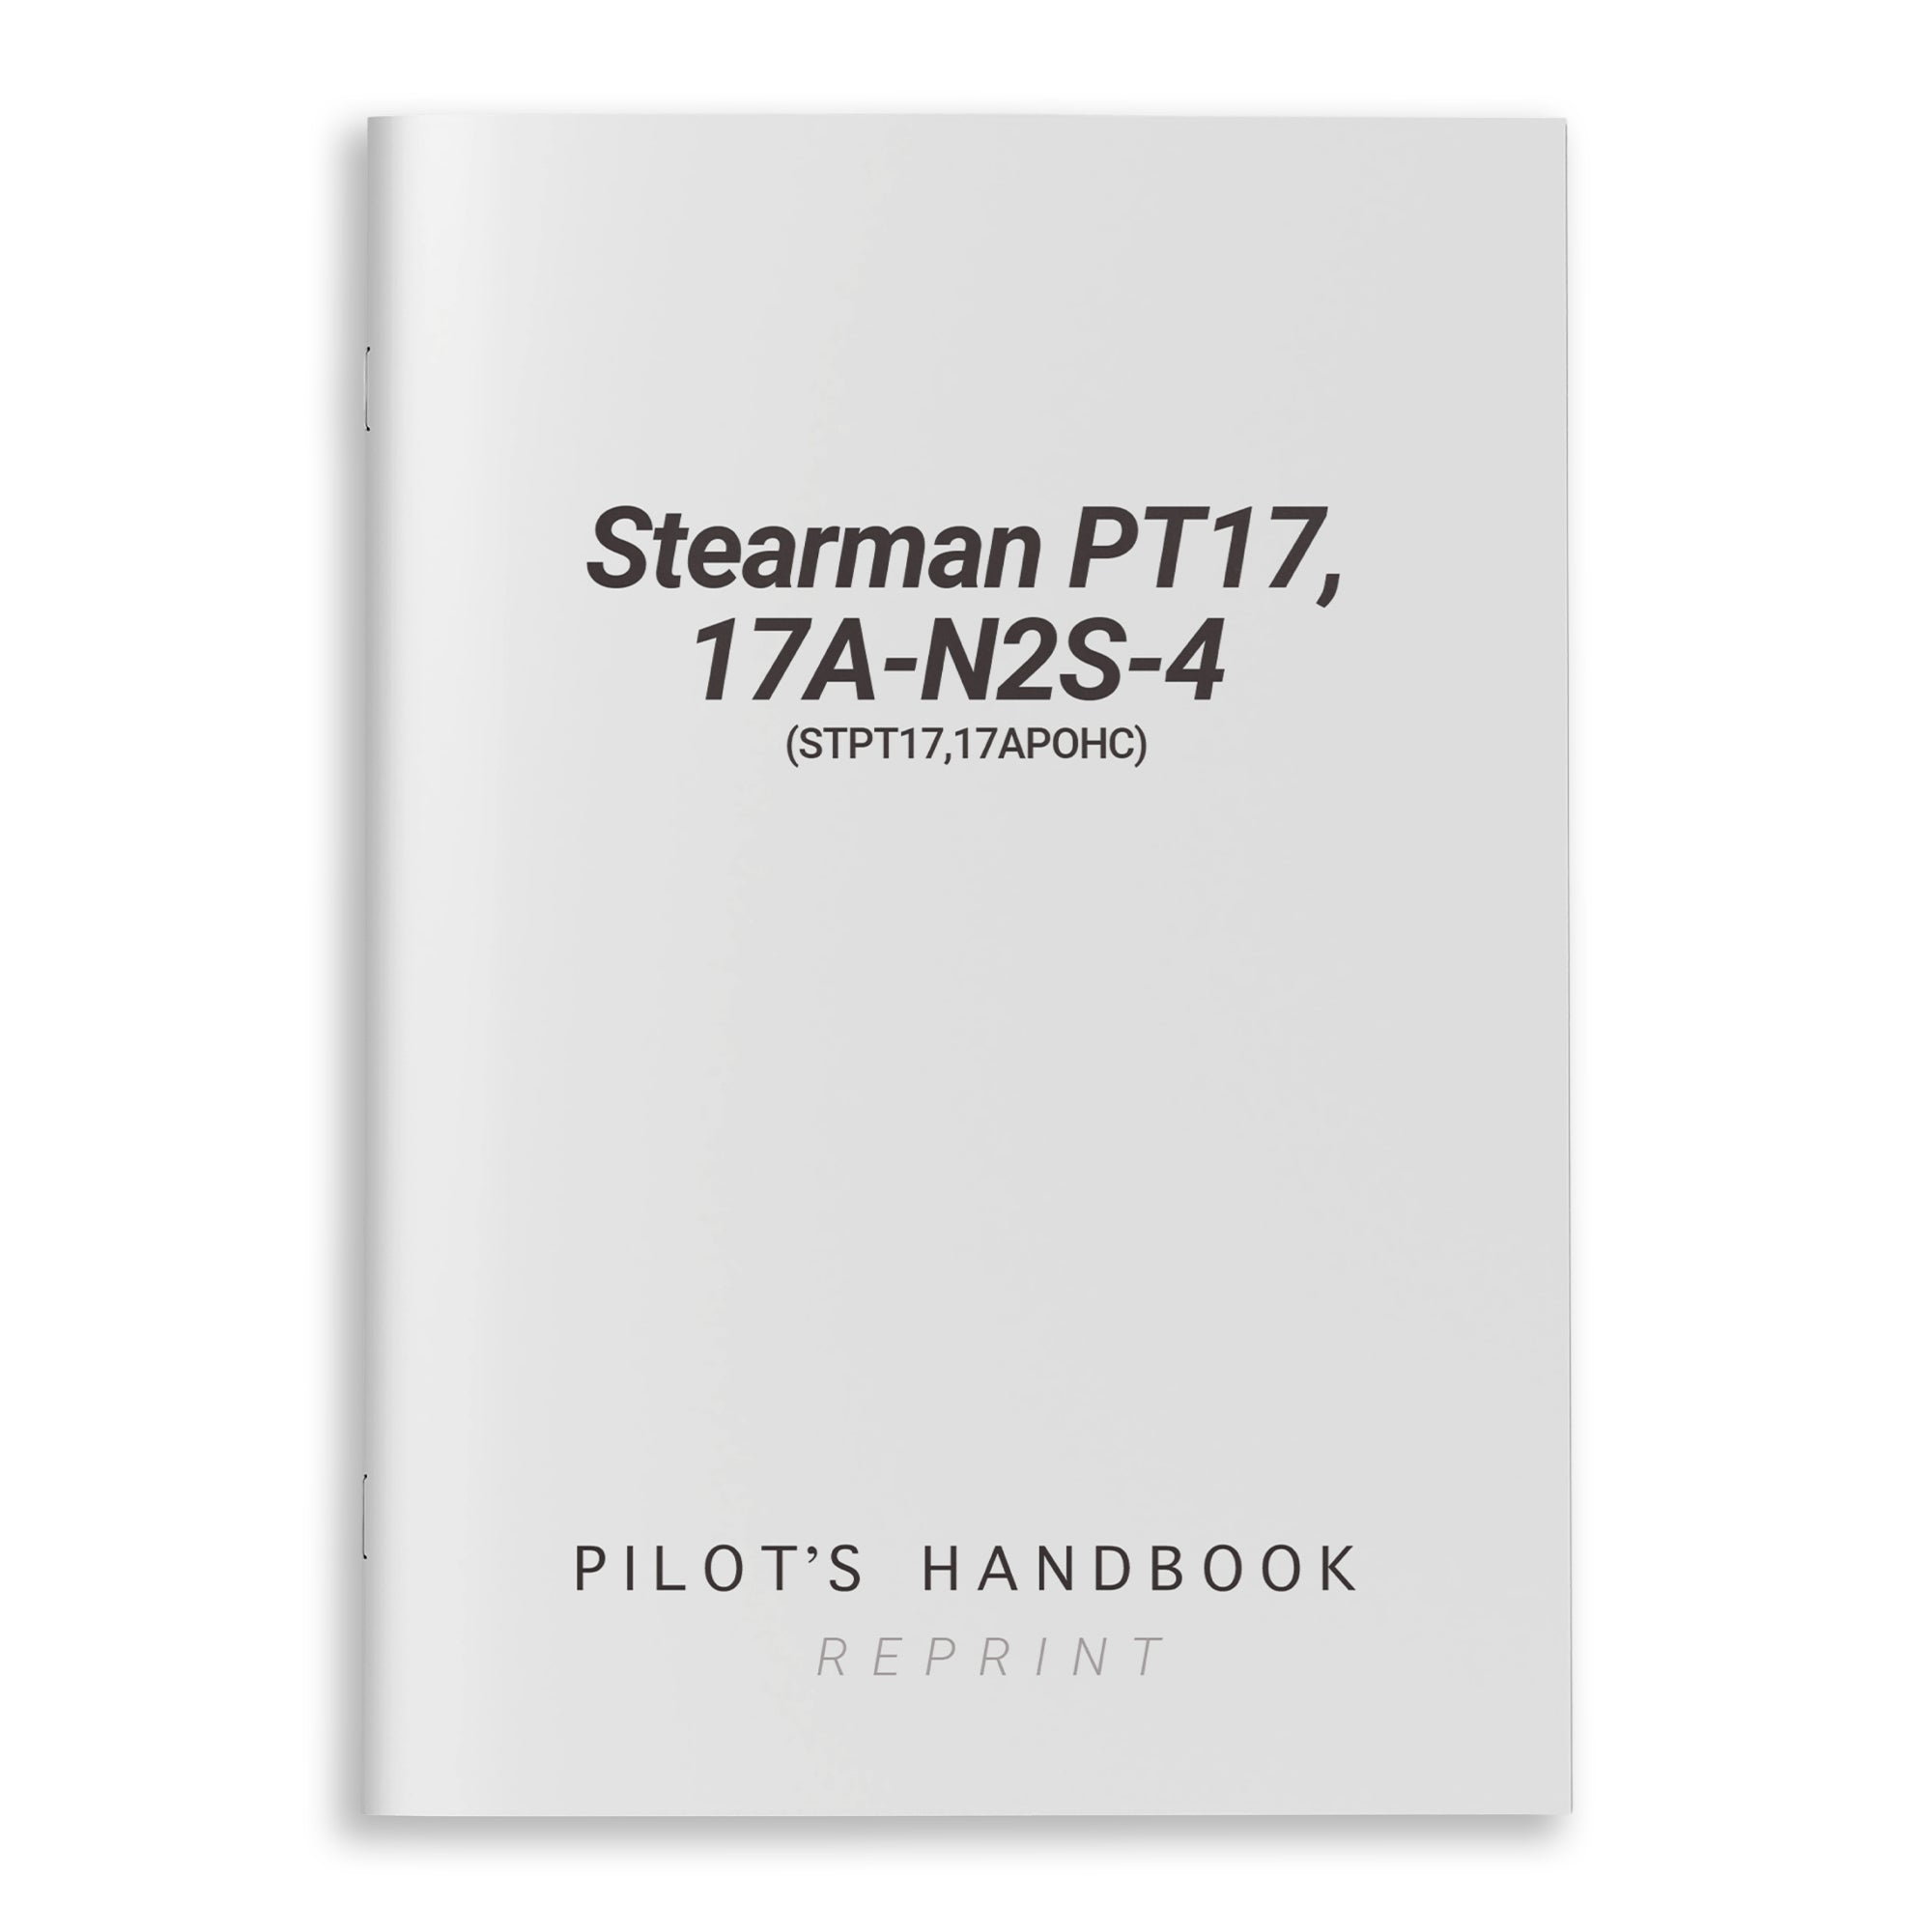 Stearman PT17,17A-N2S-4 Pilot's Handbook (STPT17,17APOHC) - PilotMall.com